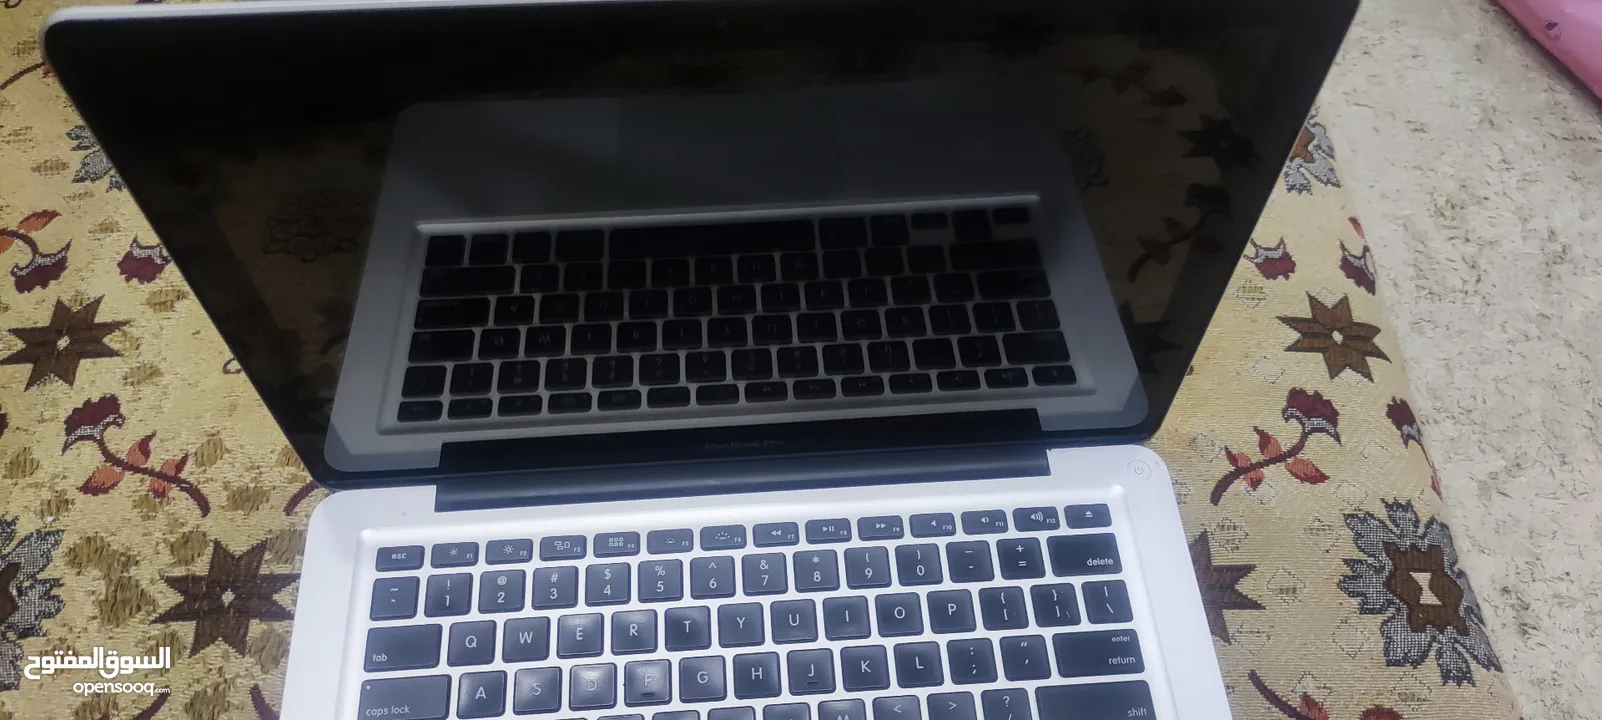 apple macbook pro 13"-inch 2012 mid